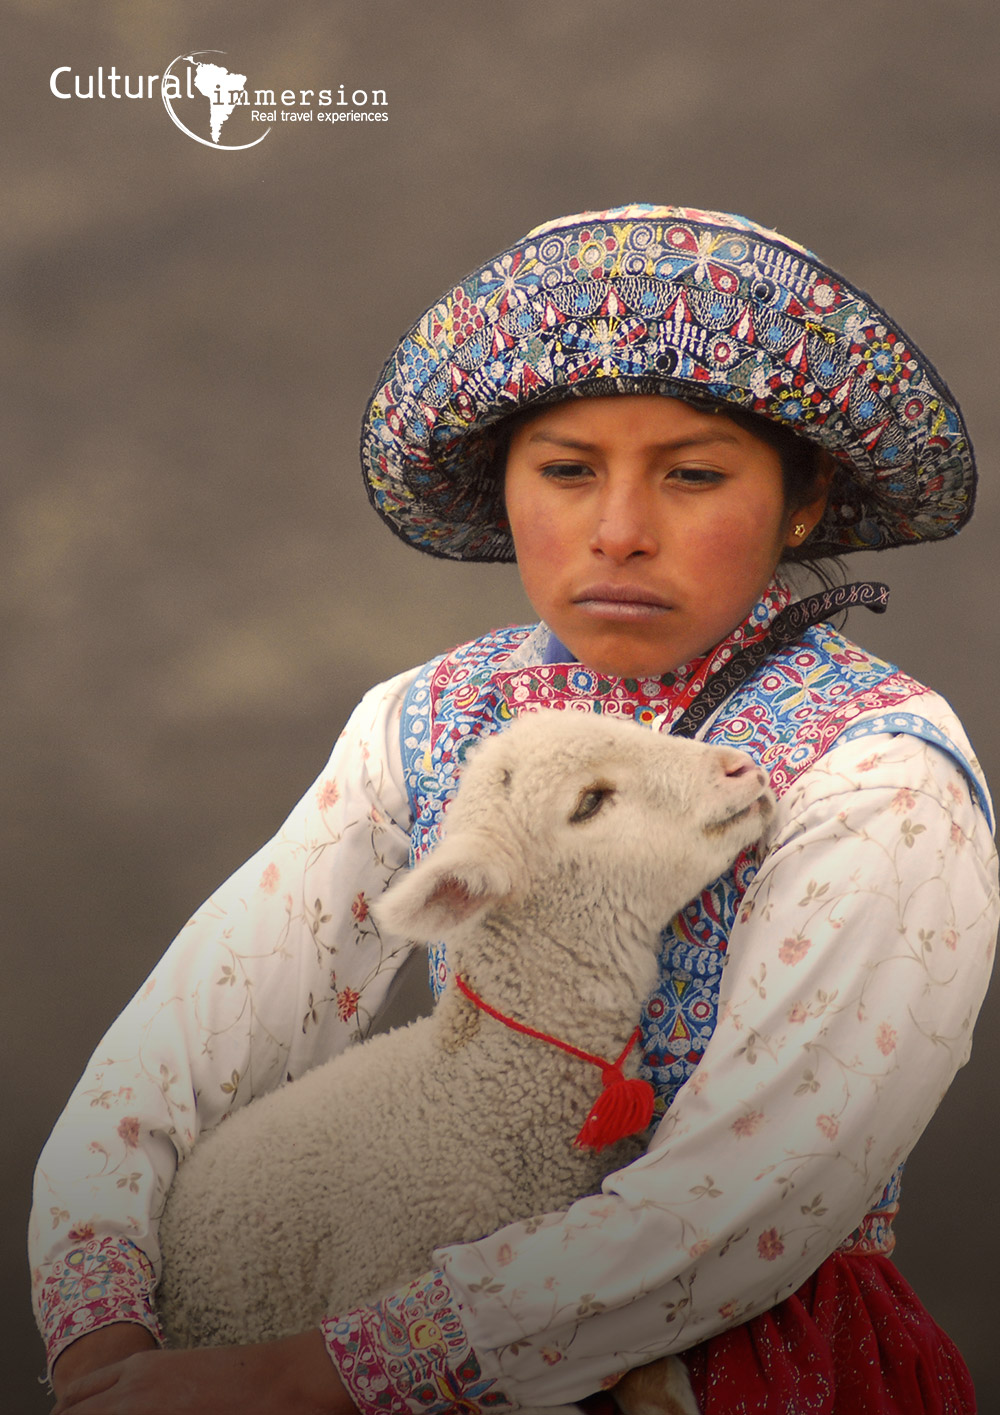 Peruvian Highlands